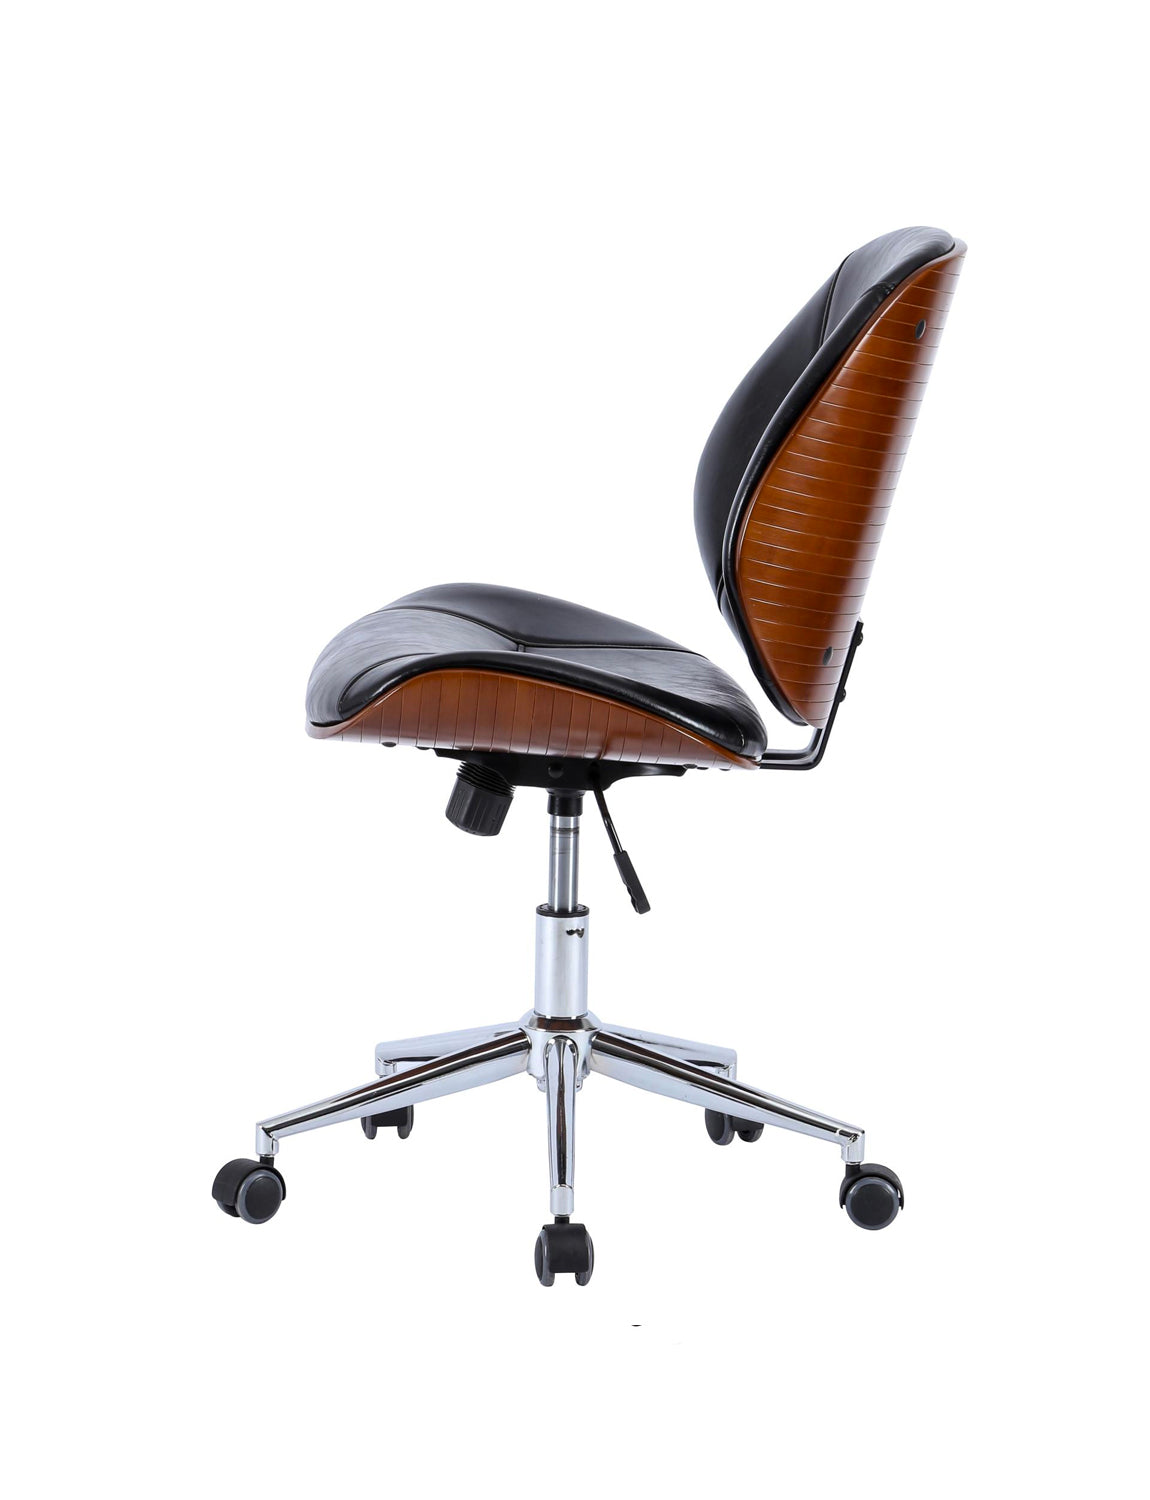 Steve Office Chair